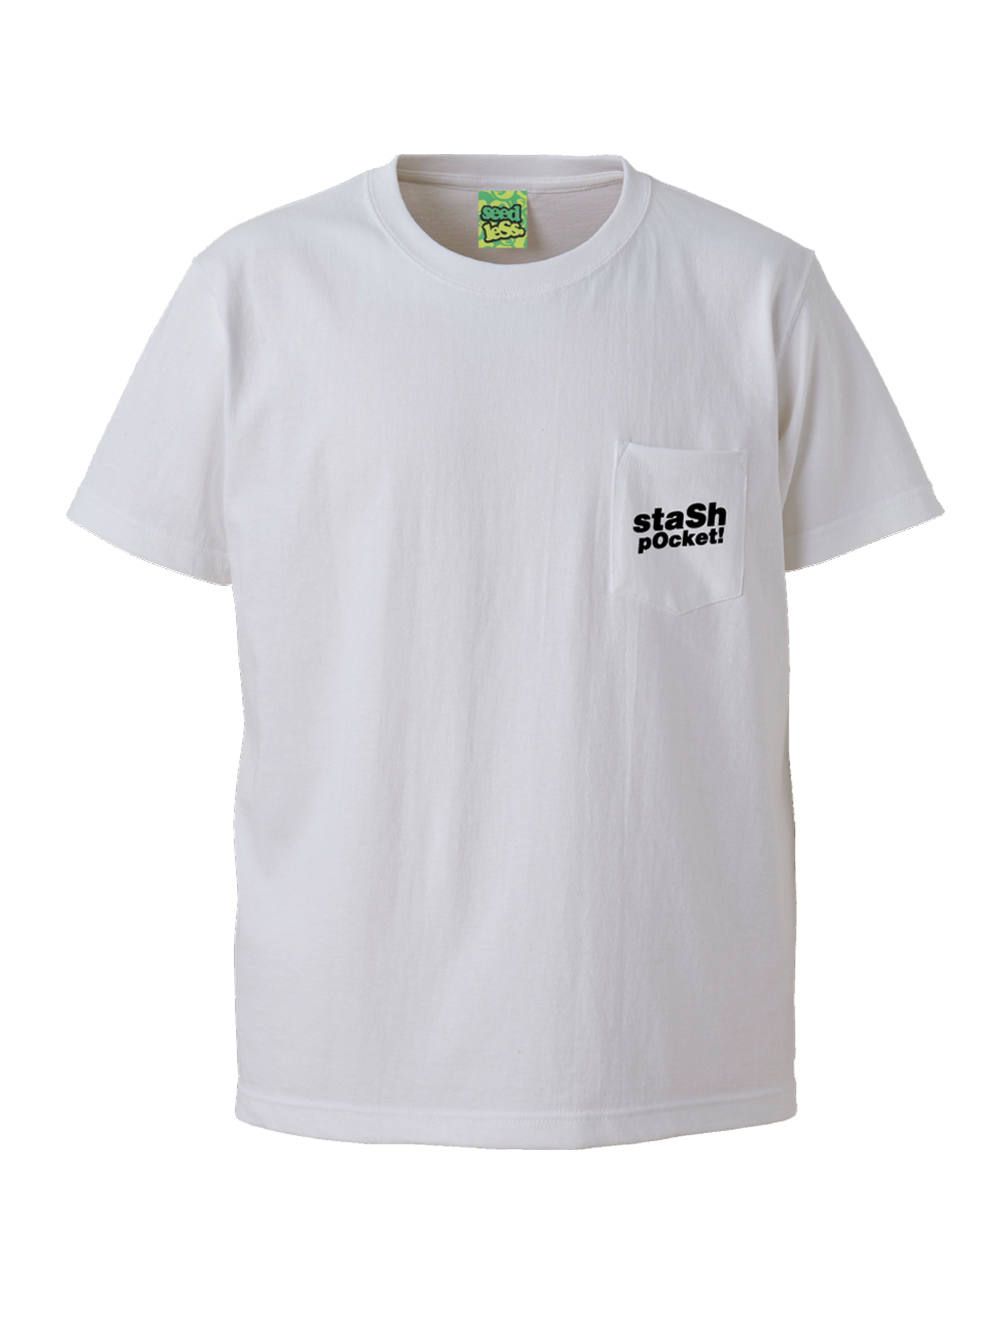 seedleSs - stash pocket ! s/s T shirts | DOLL